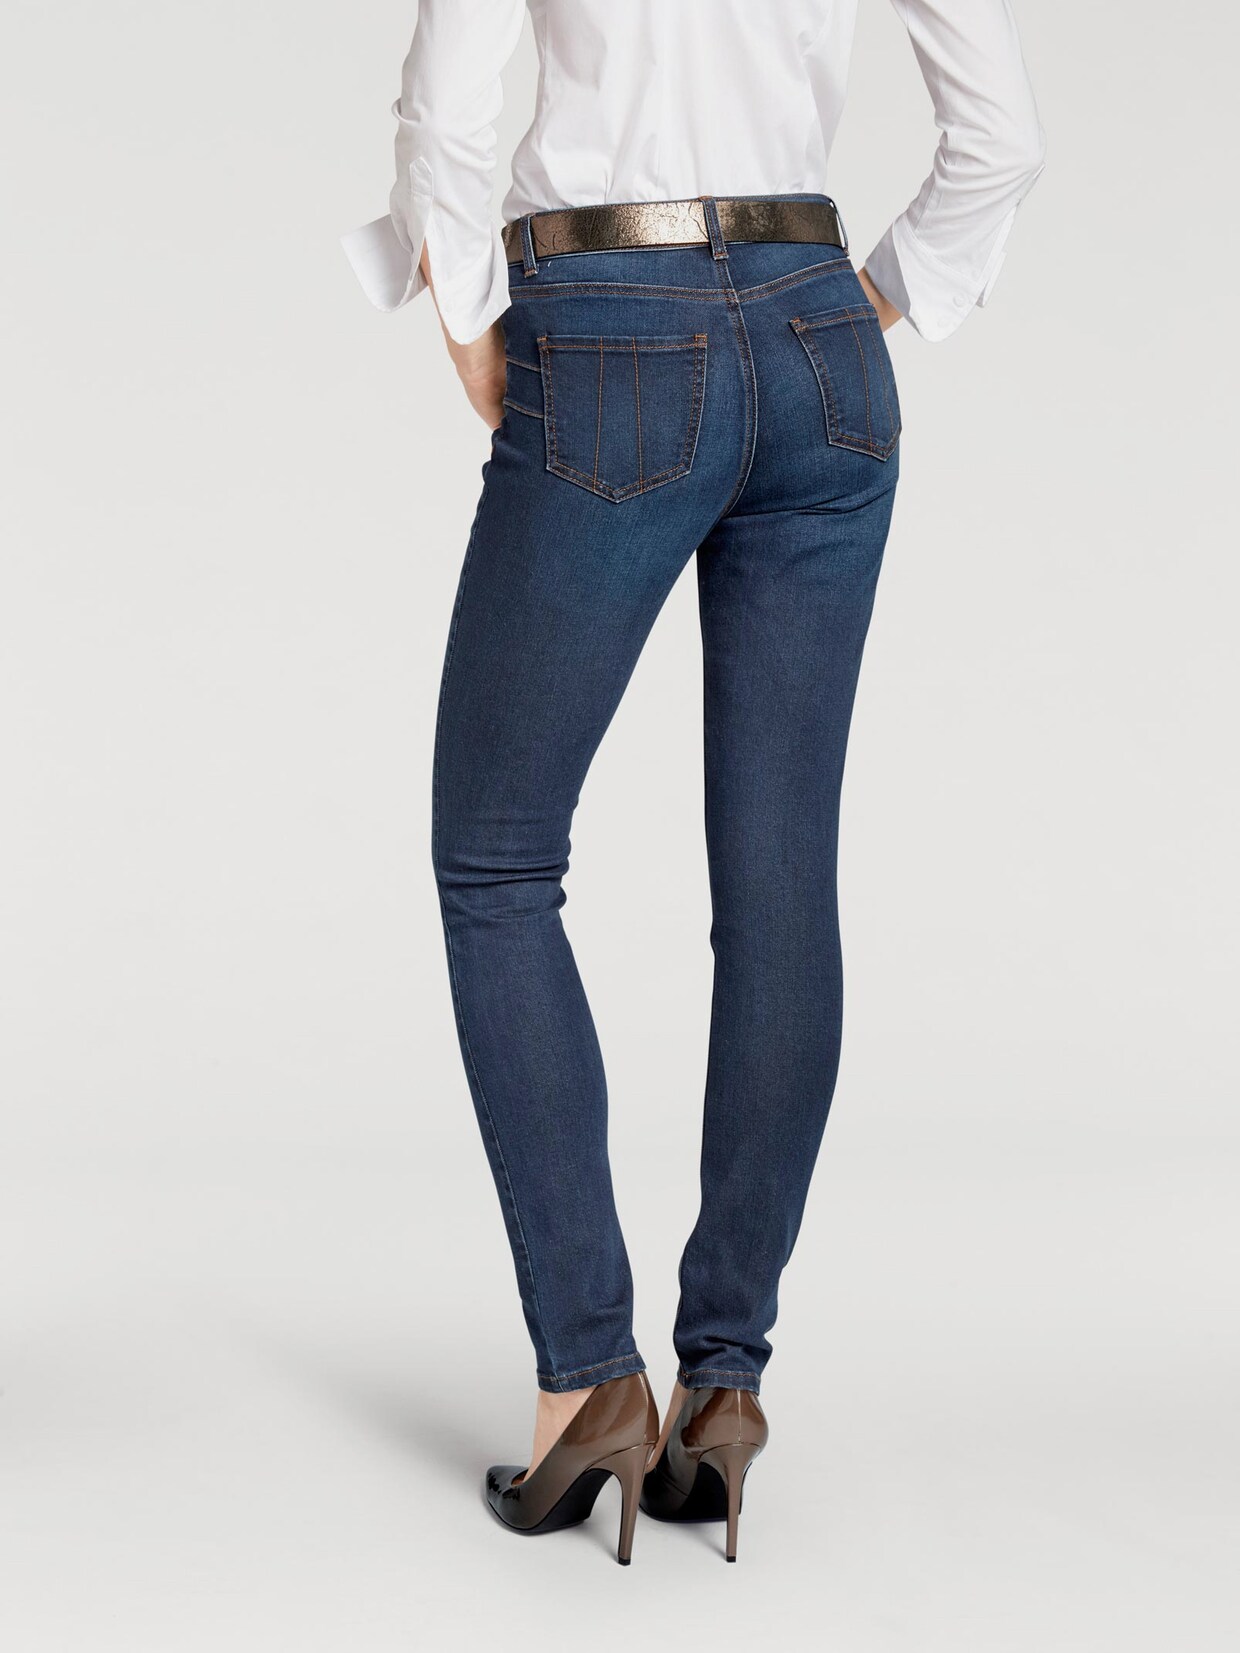 Linea Tesini jeans effet ventre plat - bleu denim